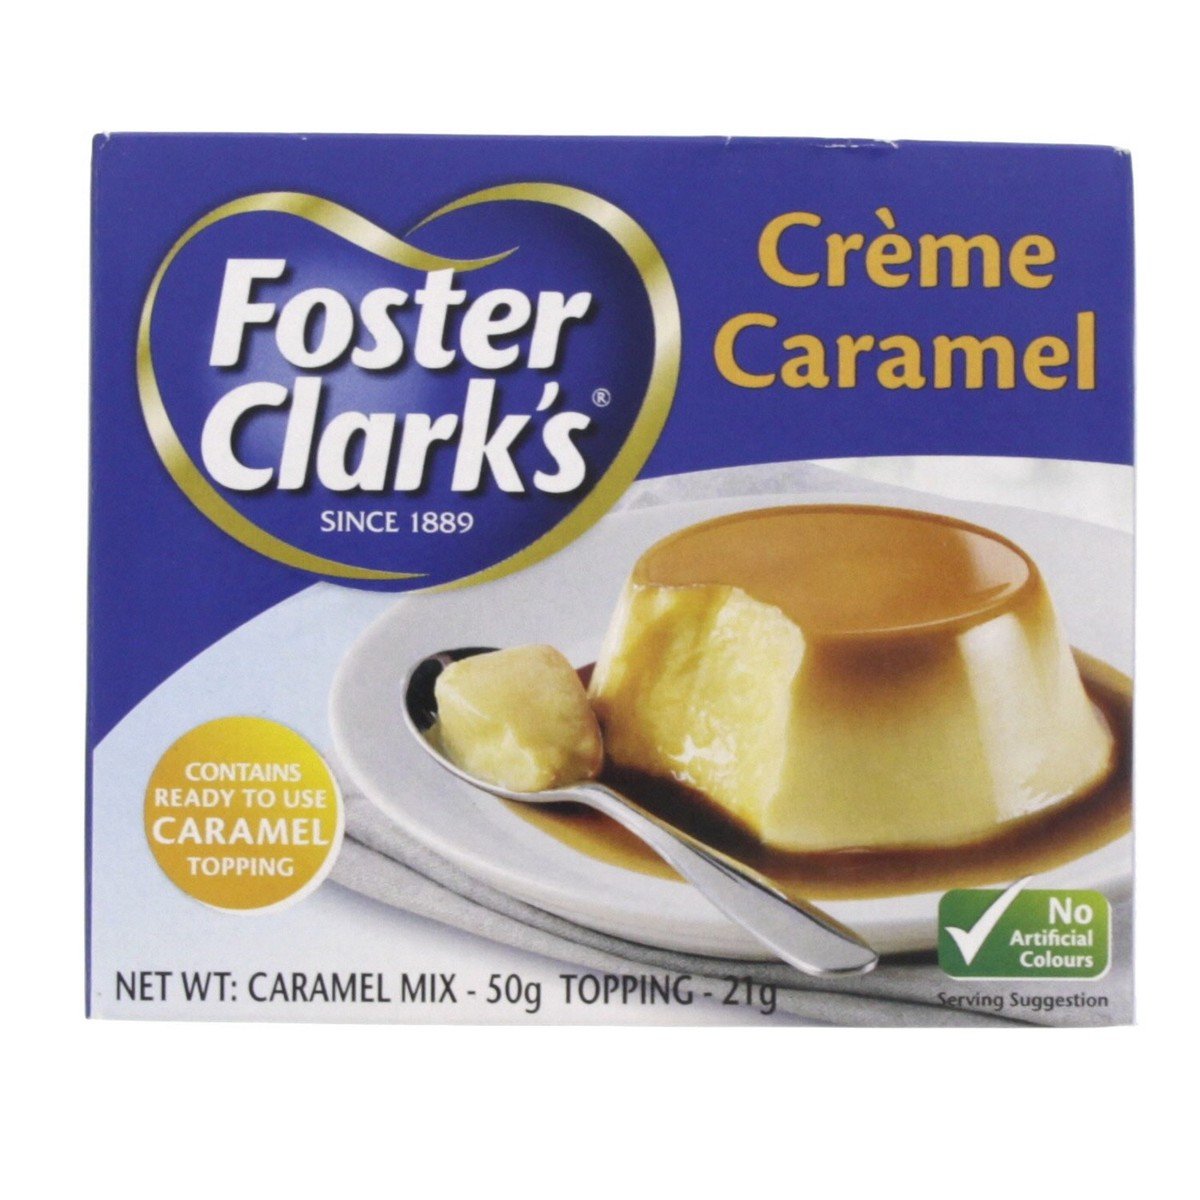 Foster Clarks Foster Clark's Creme Caramel 71g